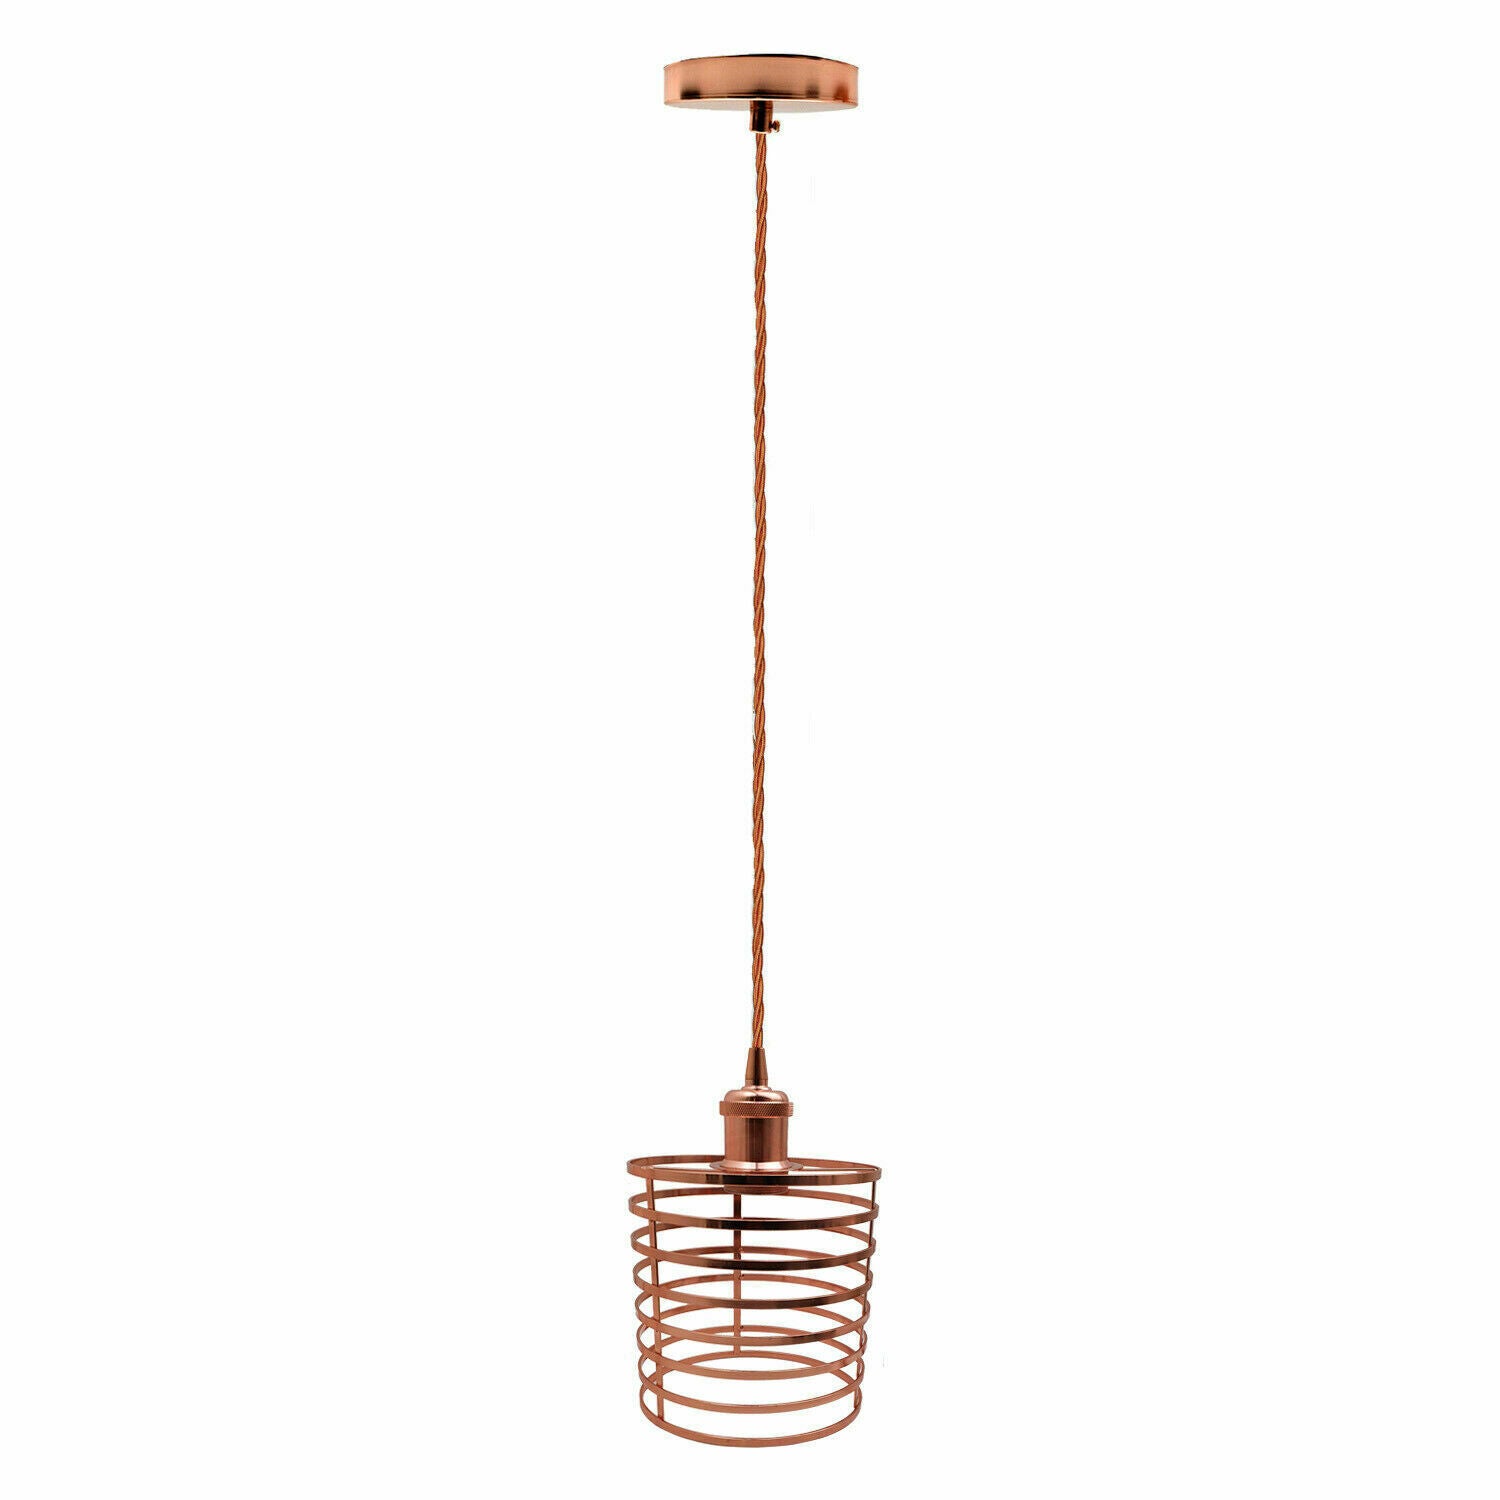 Pendant light Modern chandelier style ceiling lampshade metal rose gold~2130 - LEDSone UK Ltd